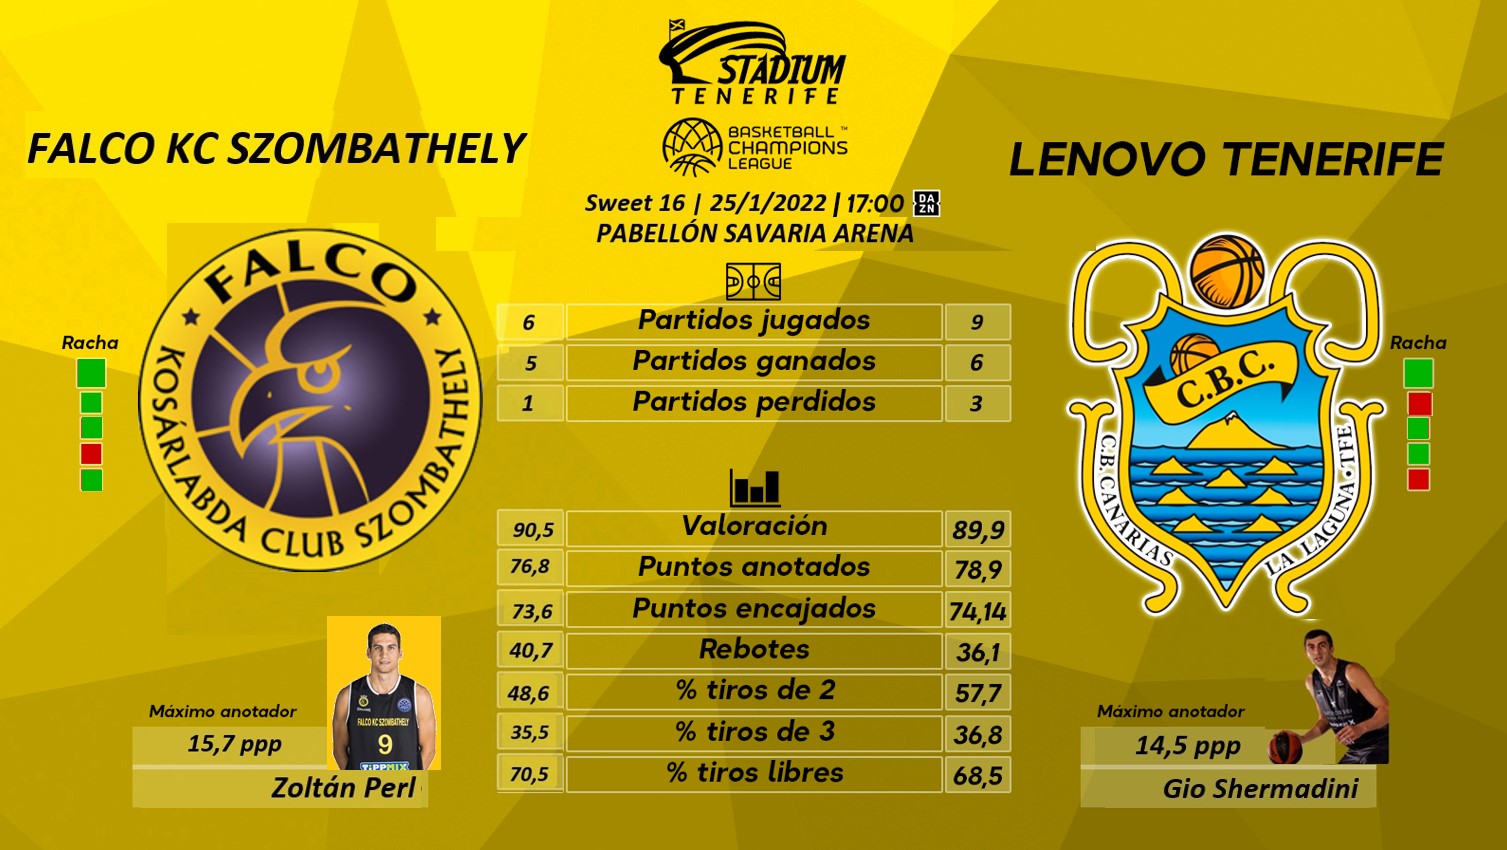 Previa del Falco Szombathely - Lenovo Tenerife (Sweet 16 - Basketball Champions League)